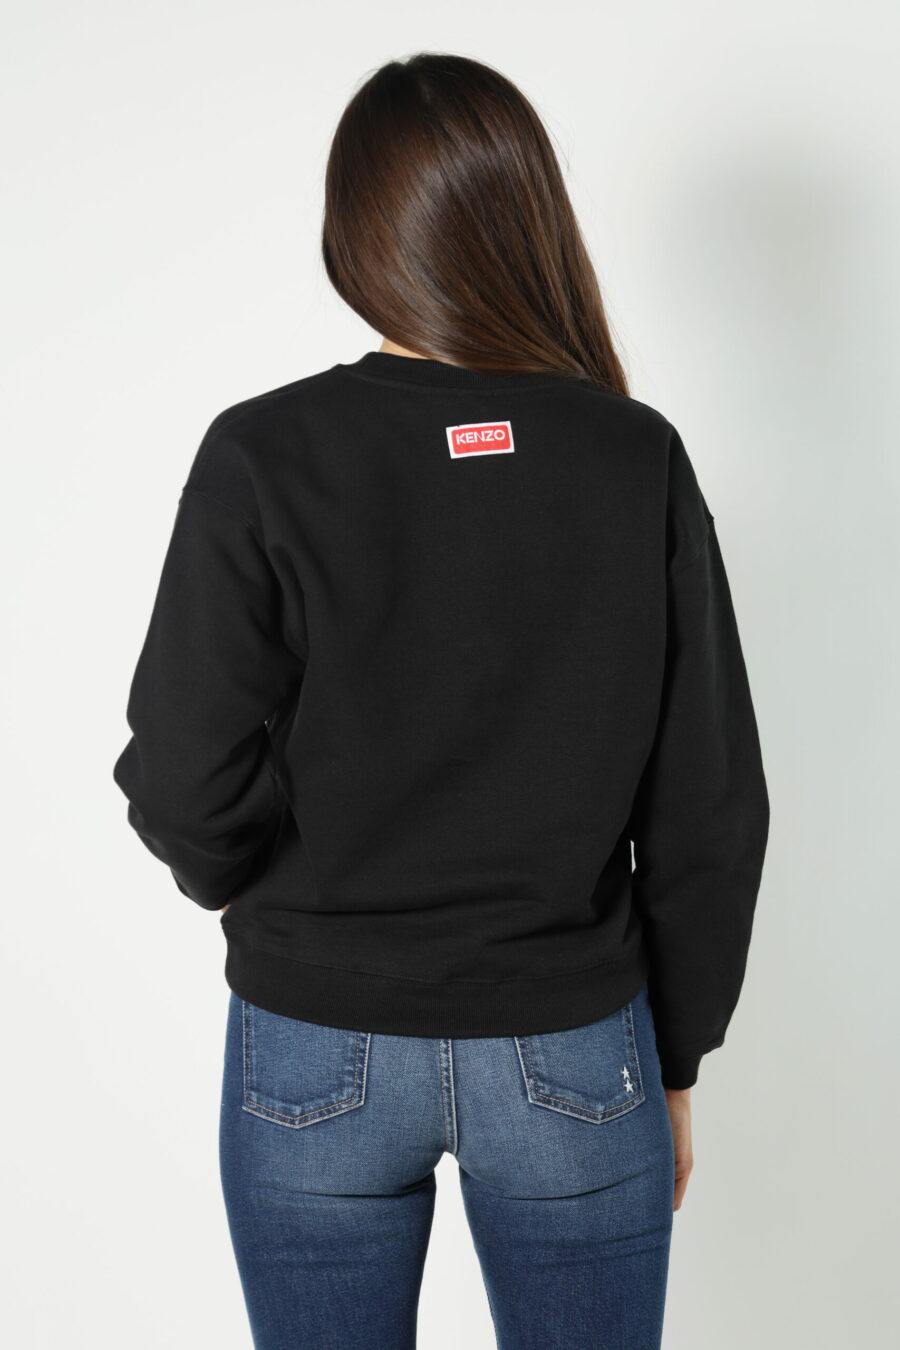 Black sweatshirt with "boke flower" logo - 8052865435499 348 scaled